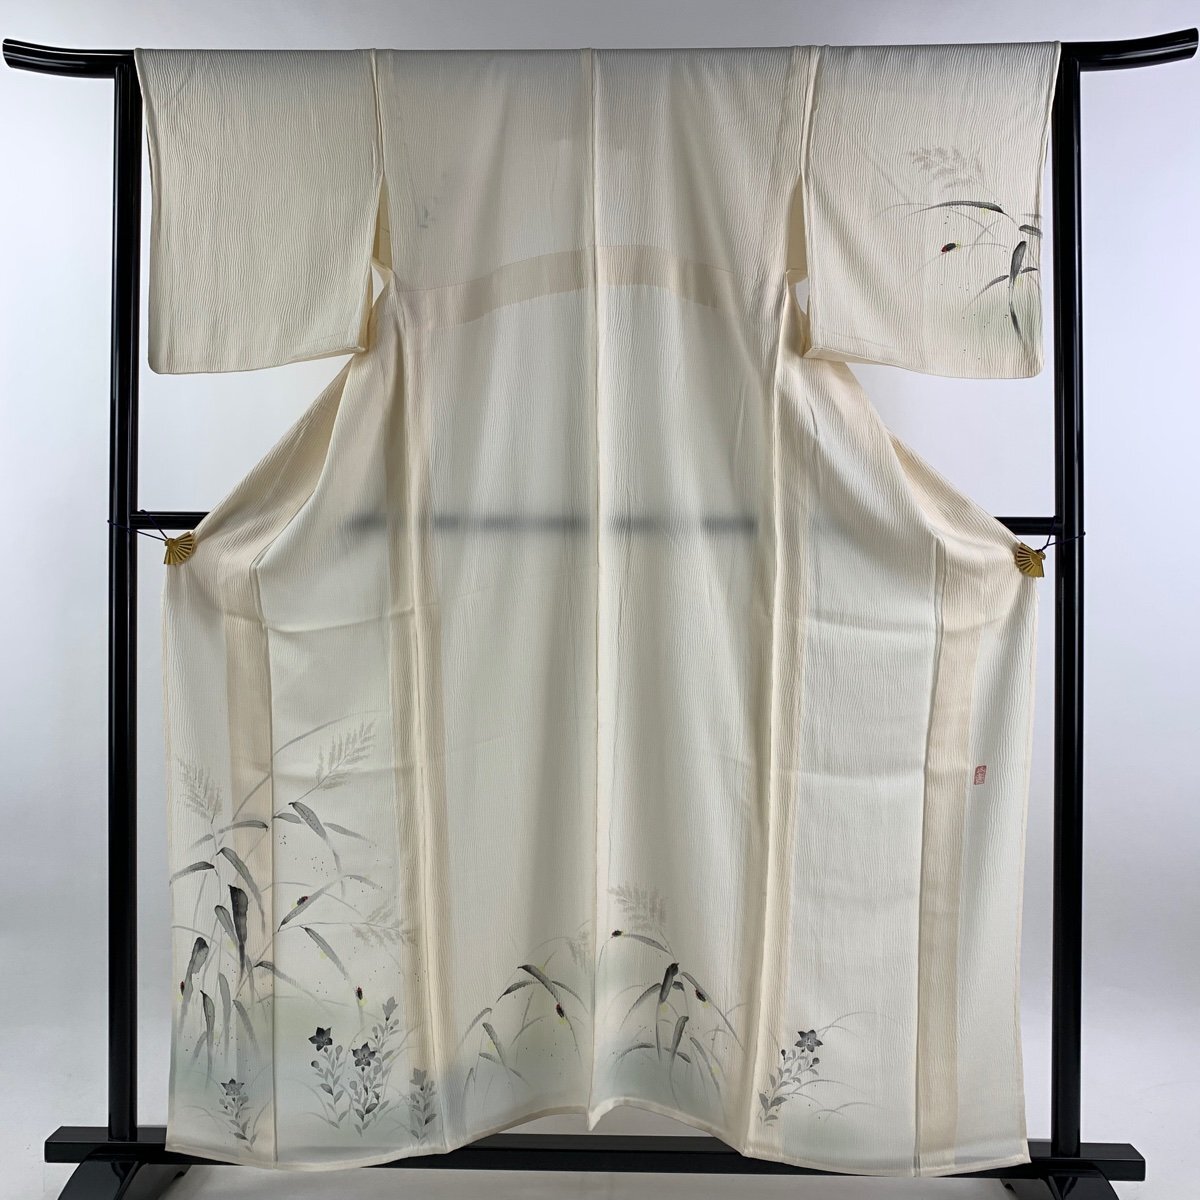  tsukesage length 157.5cm sleeve length 64.5cm M single .. comfort person atelier ..... bokashi silver . cream silk excellent article [ used ]